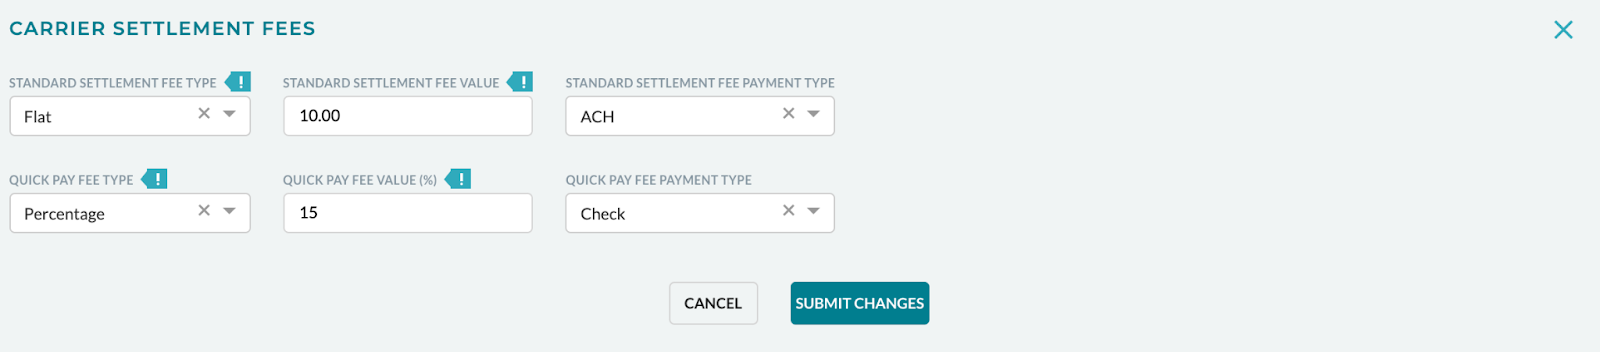 carrier_settlement_fees.png